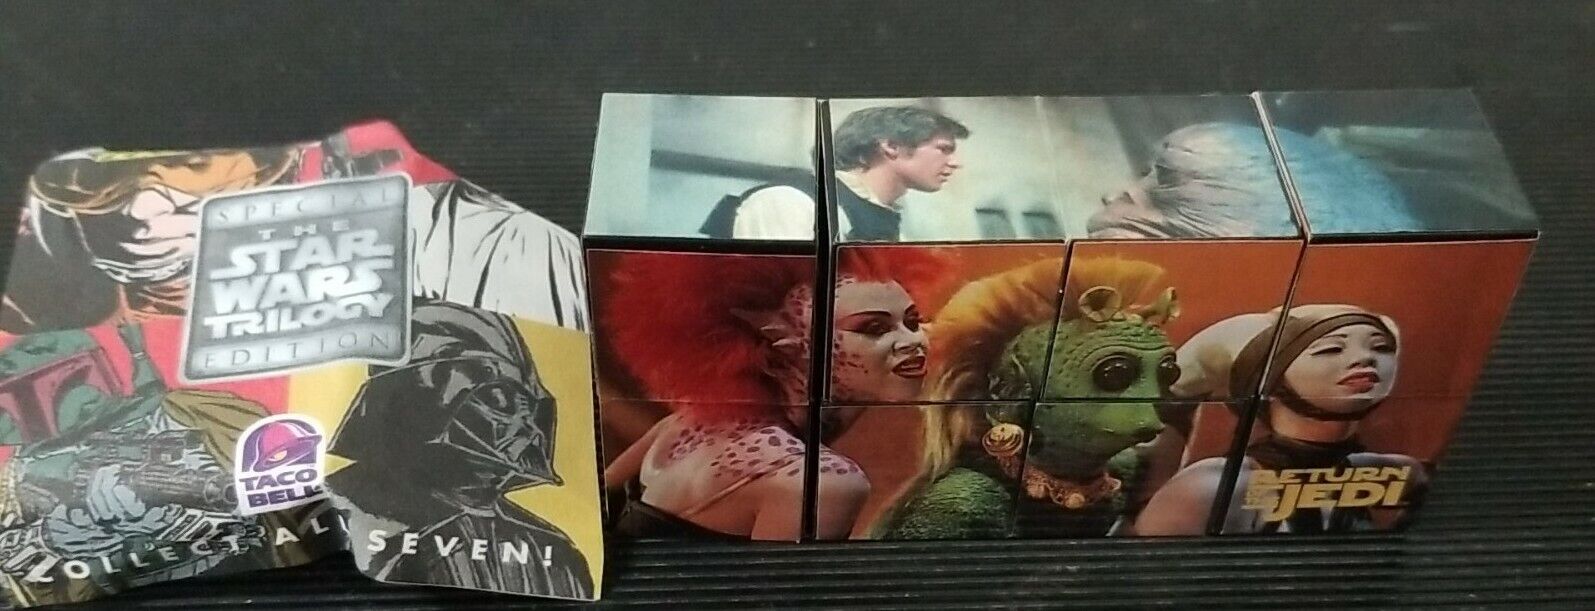 1997 Star Wars Trilogy Taco Bell Puzzle Cube Toy. Luke Skywalker Darth Vader